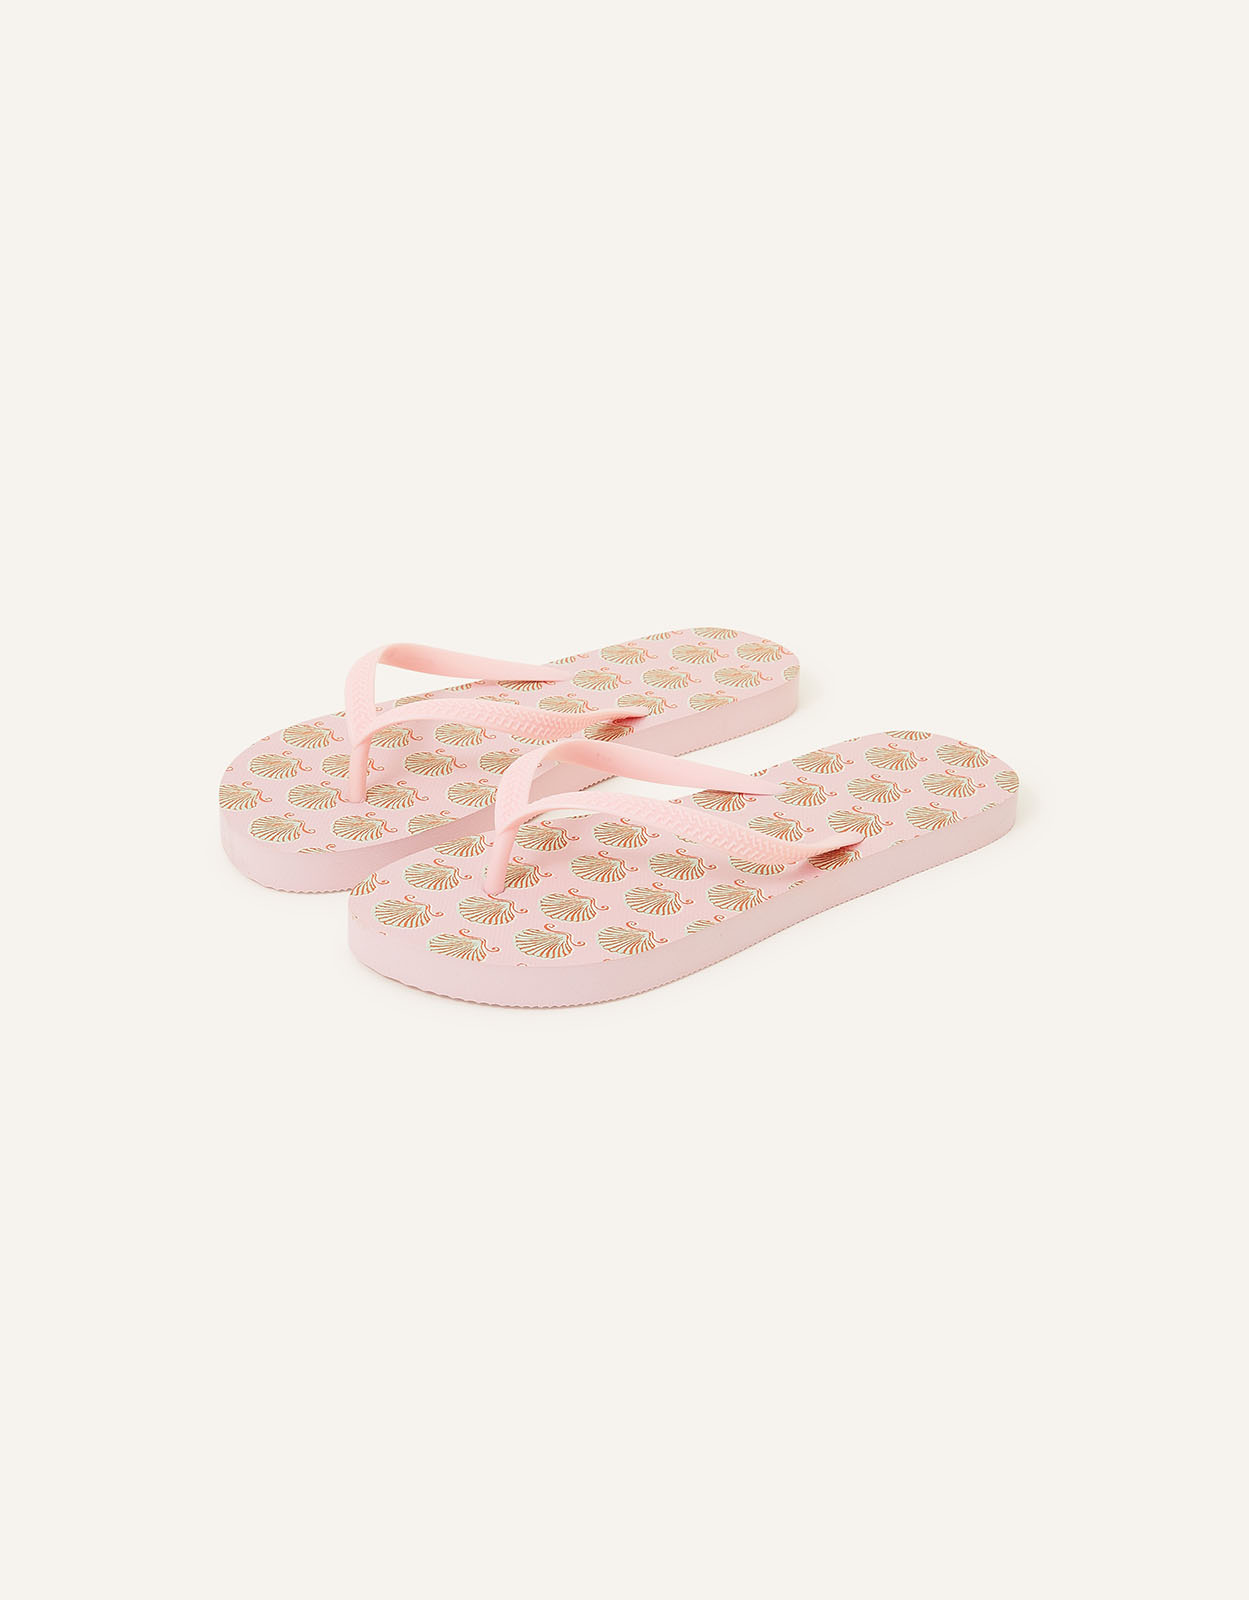 Accessorize Women's Shell Print Flip Flops Pink, Size: L